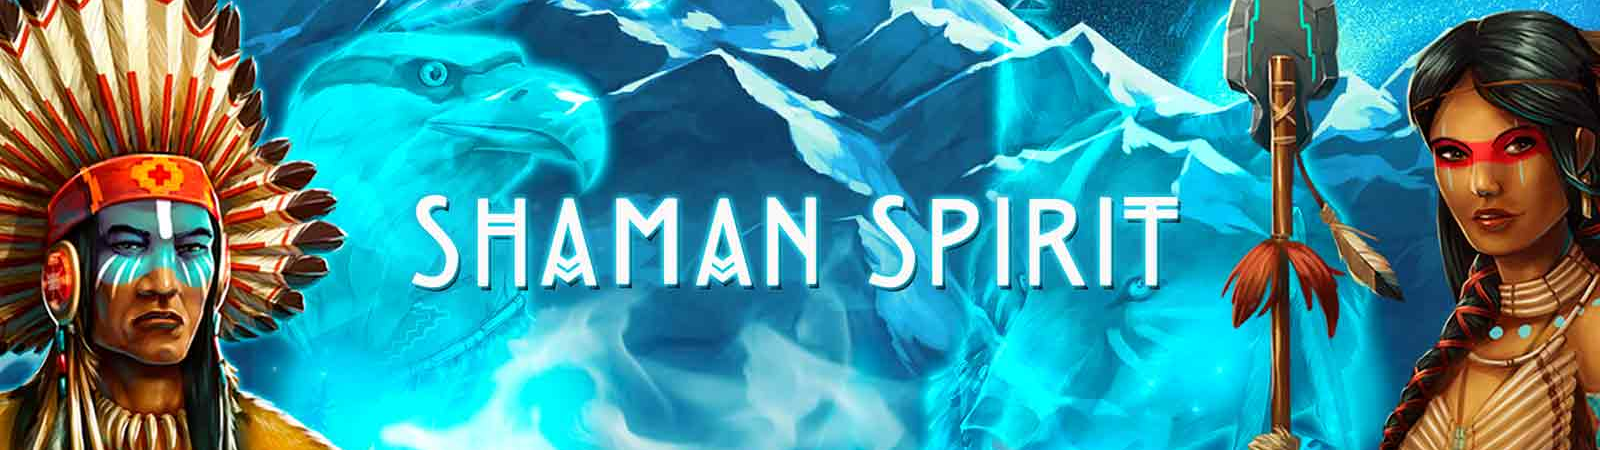 Shaman's Spirit Jackpot - SlotsBaby